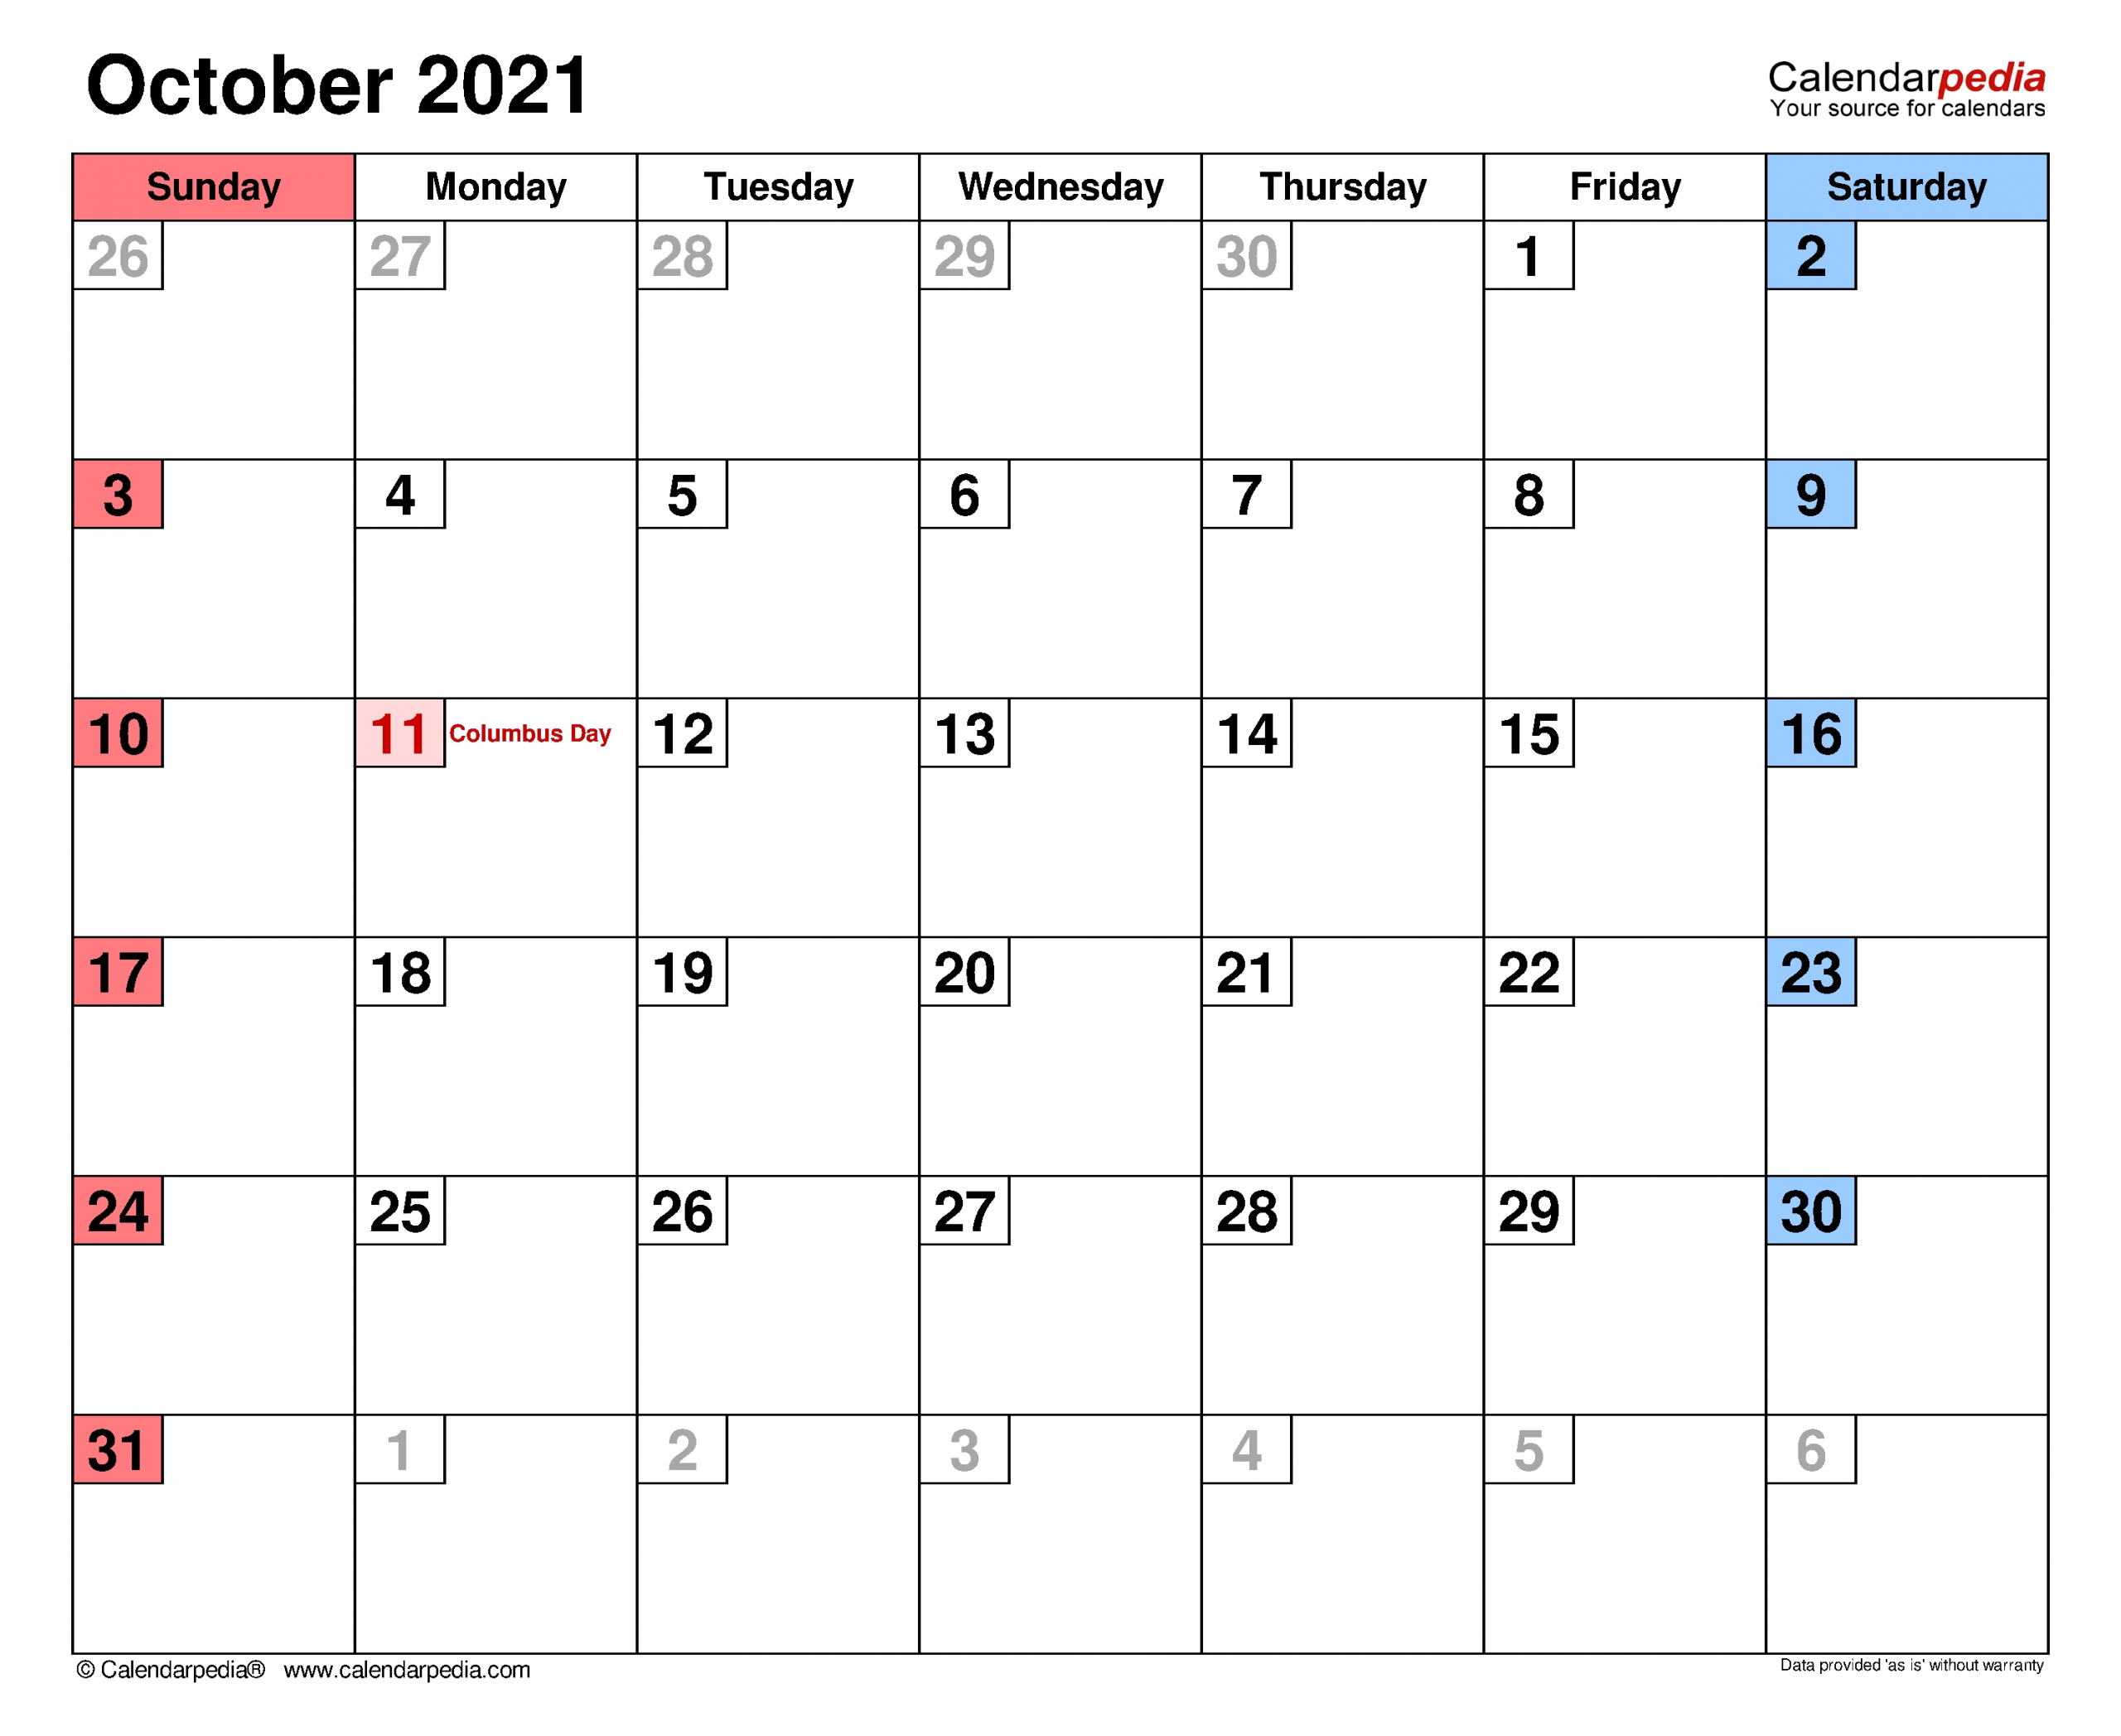 Collect August Through October 2021 Calendar